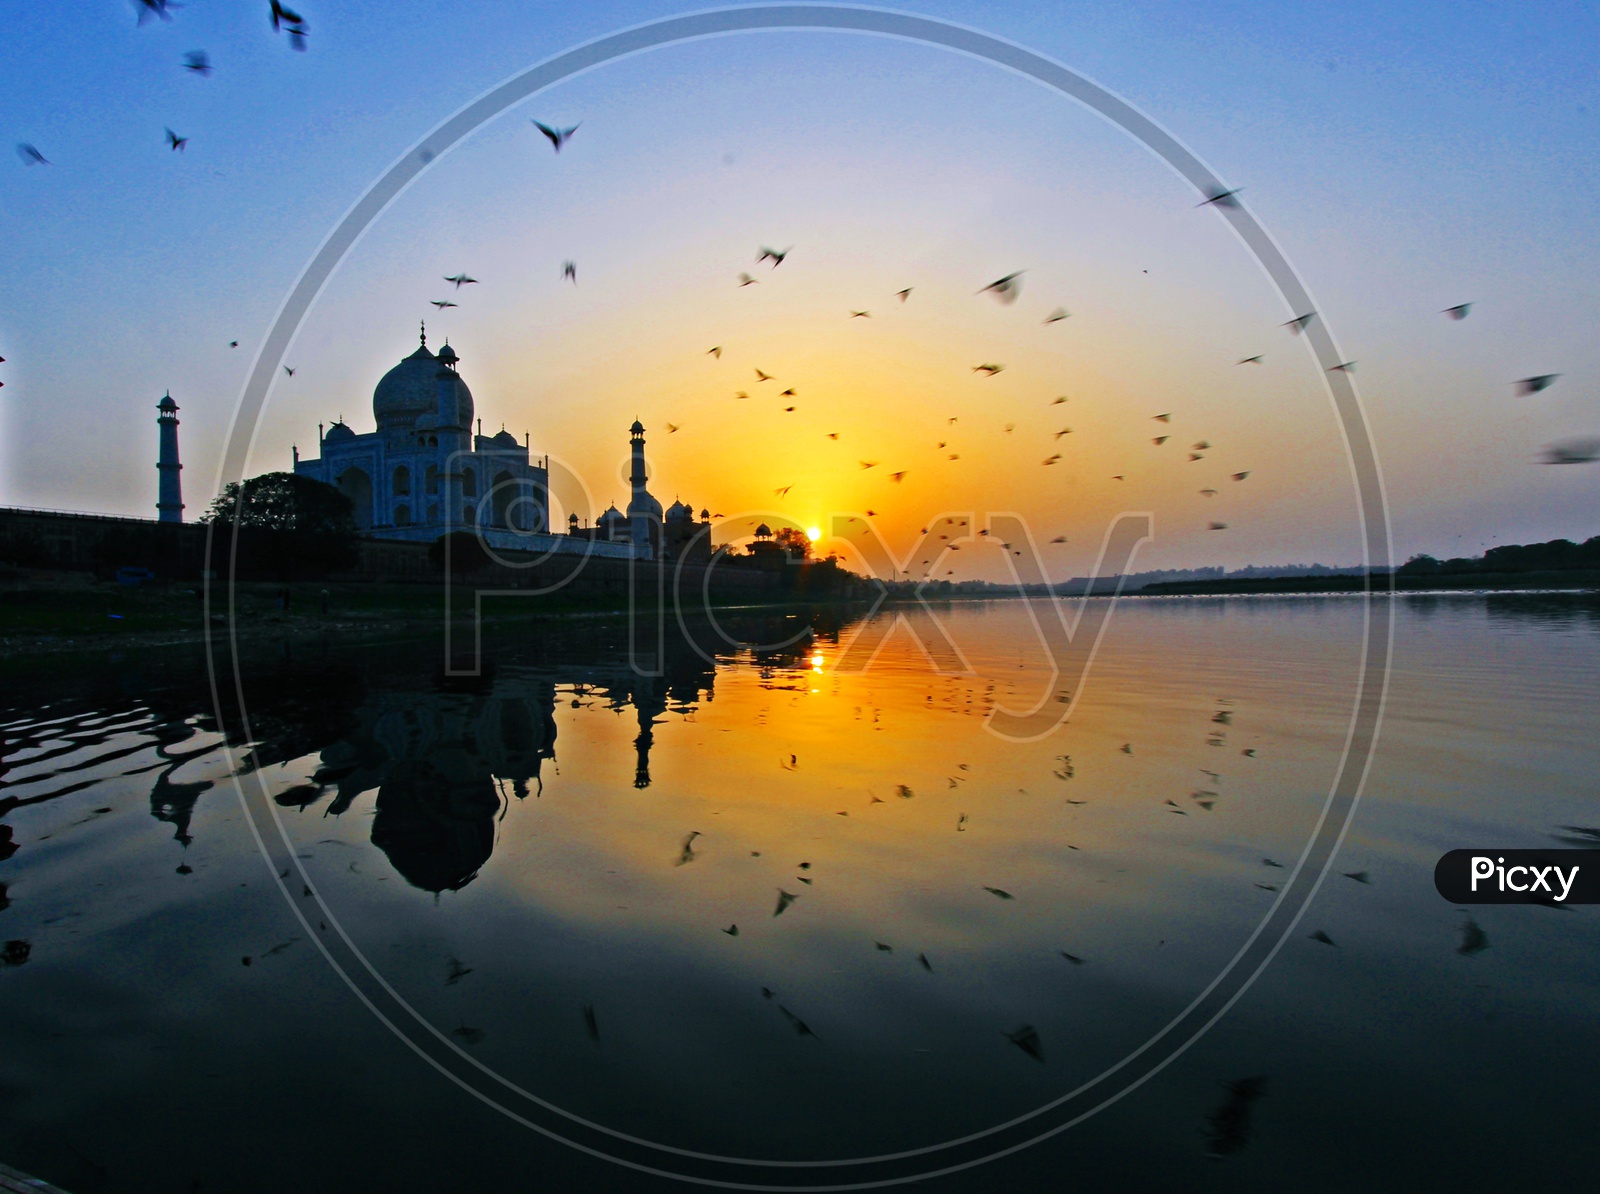 Gone with the Wind - Taj Mahal/7 Wonders